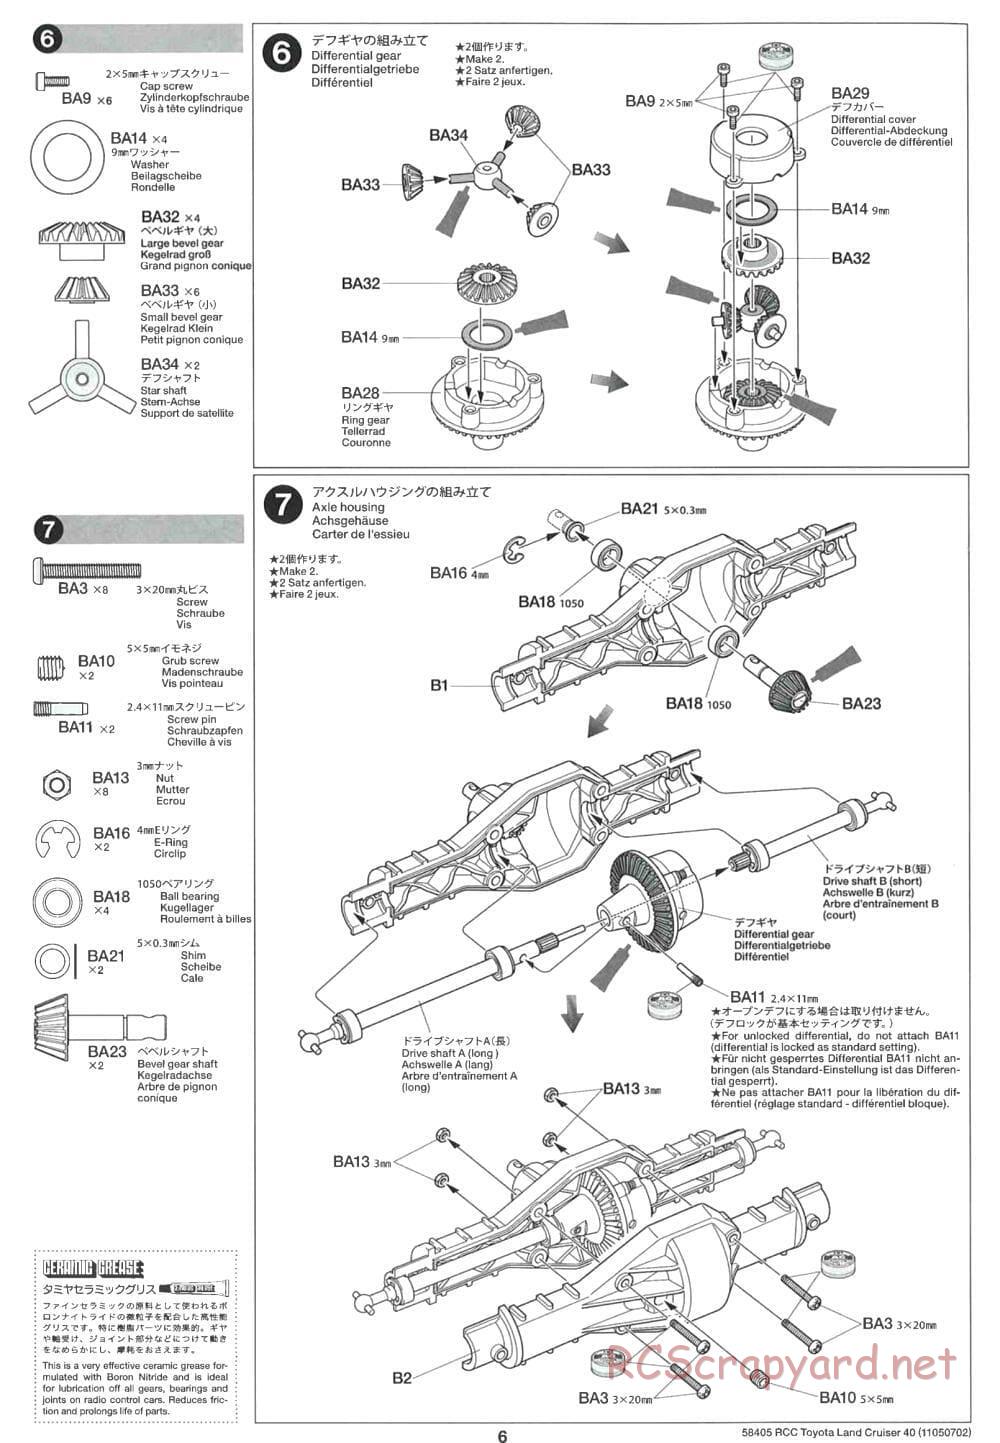 Tamiya - Toyota Land Cruiser 40 - CR-01 Chassis - Manual - Page 6